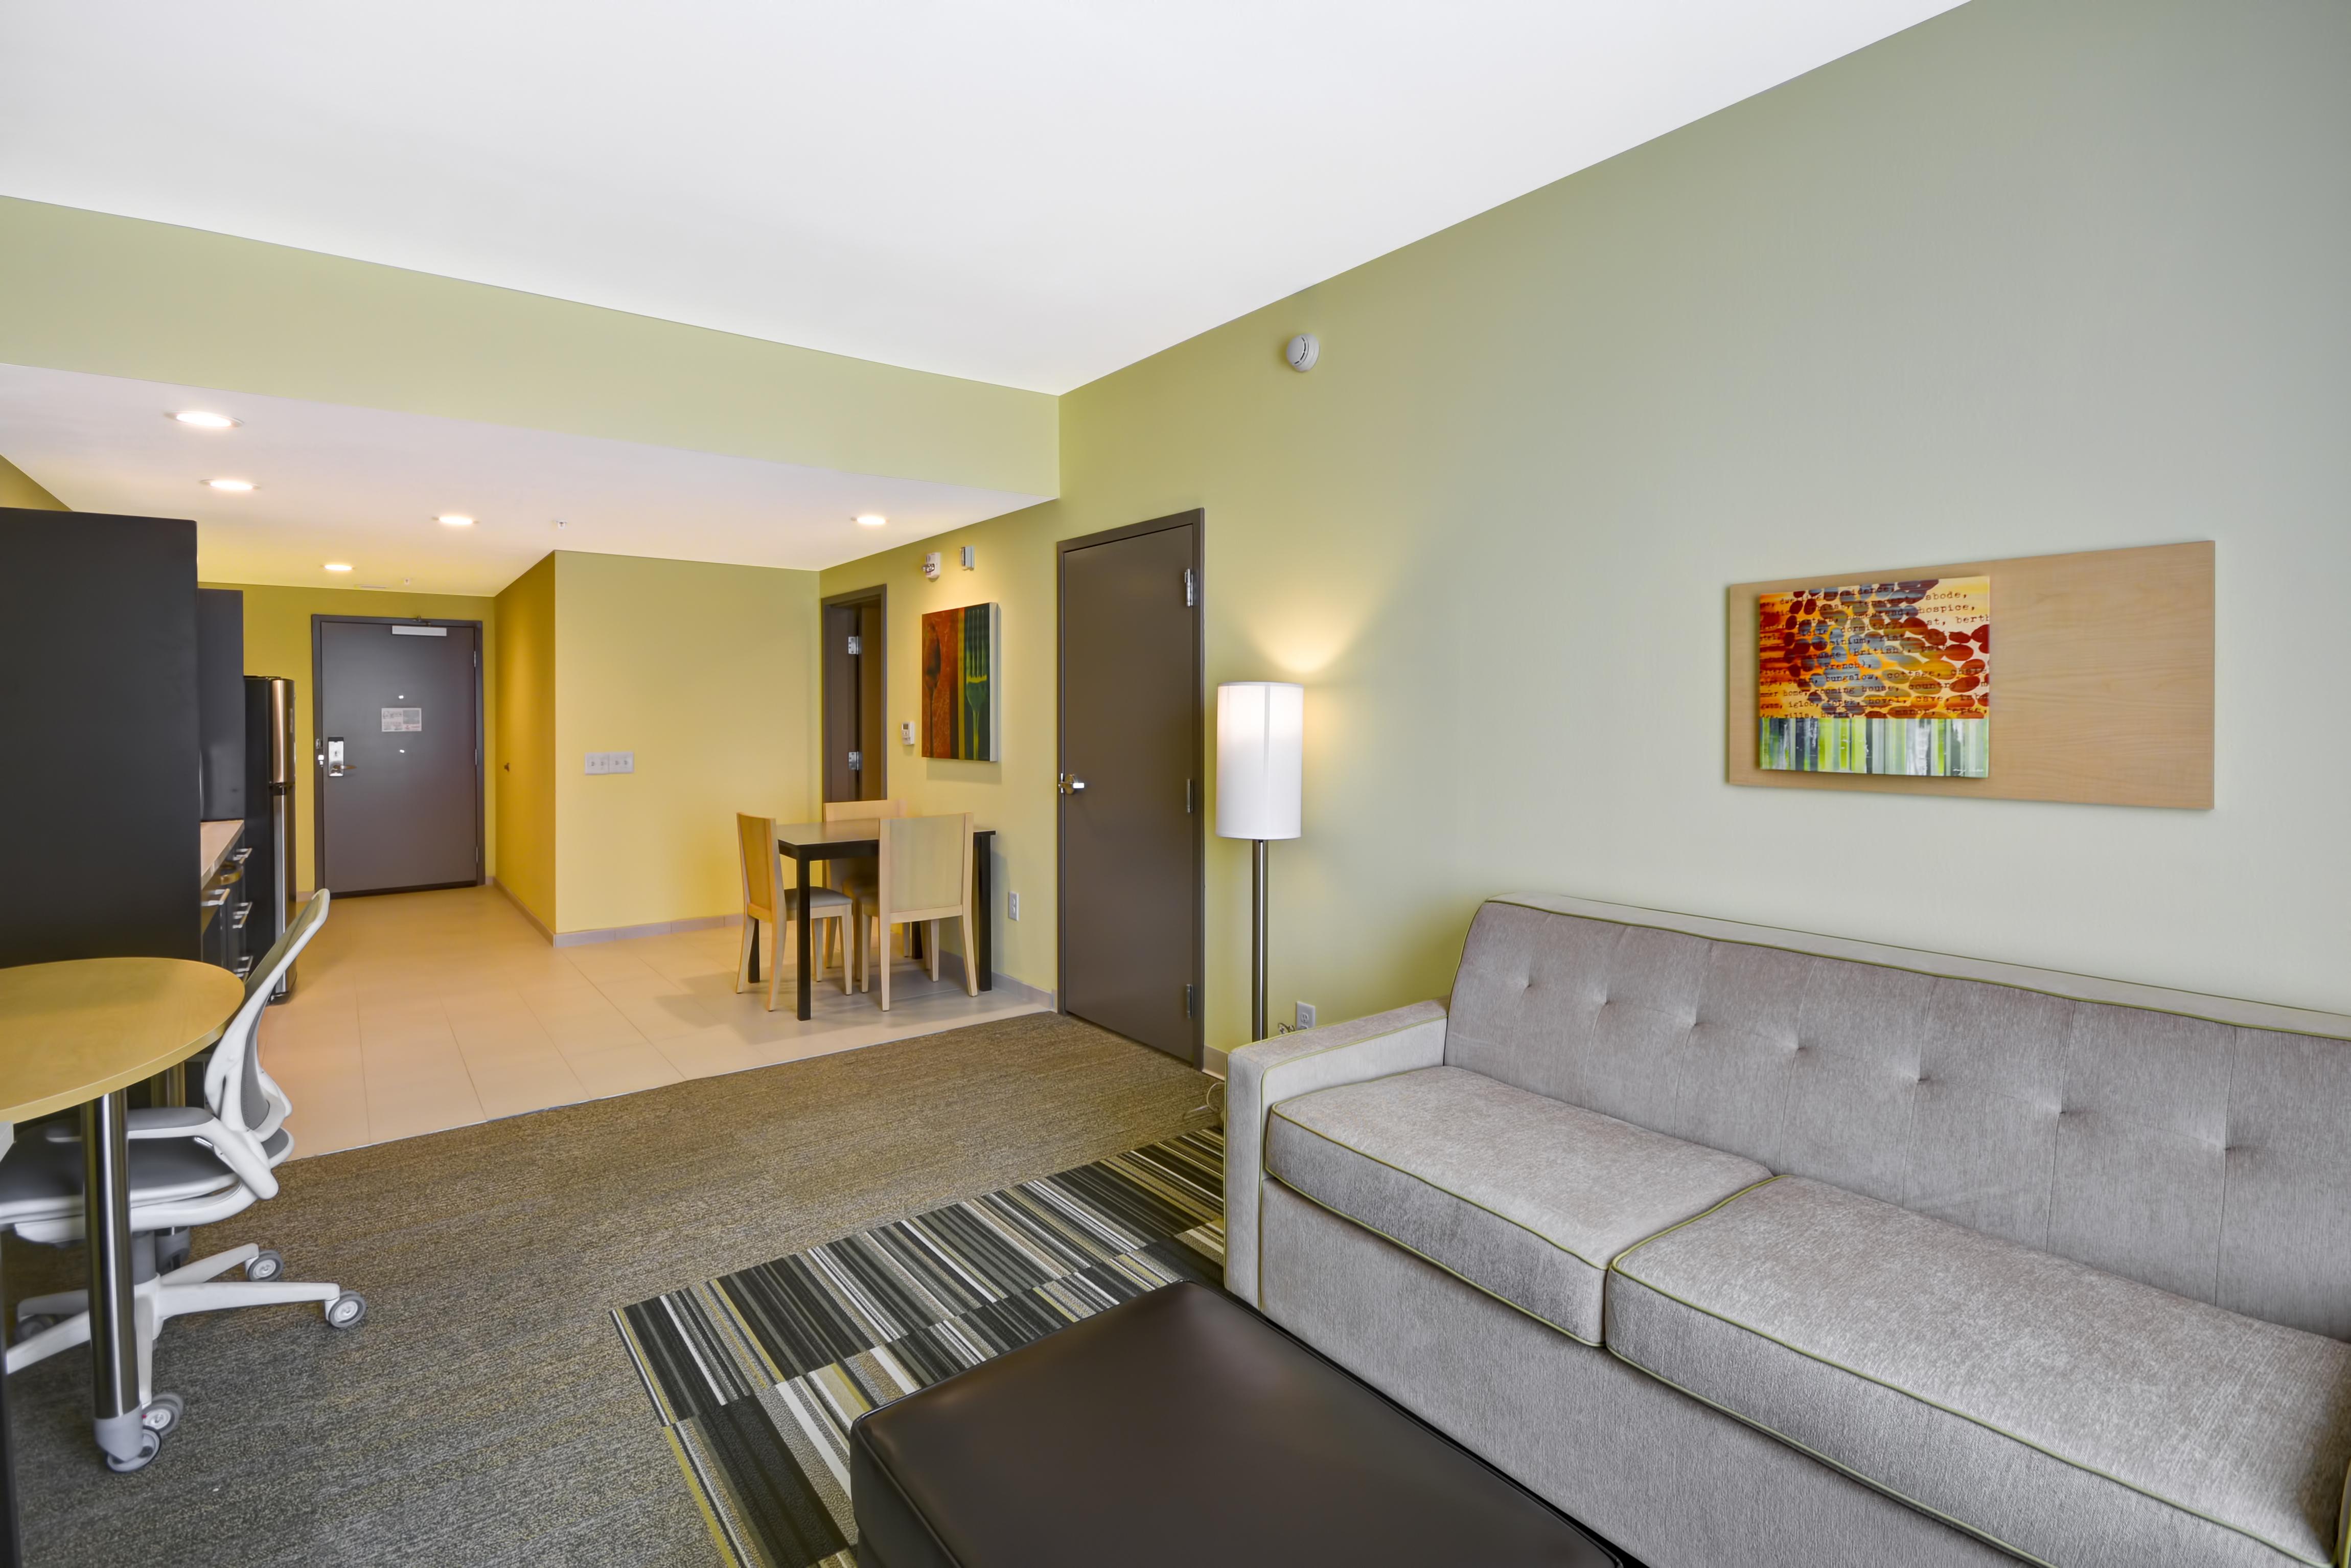 Home2 Suites by Hilton Rock Hill